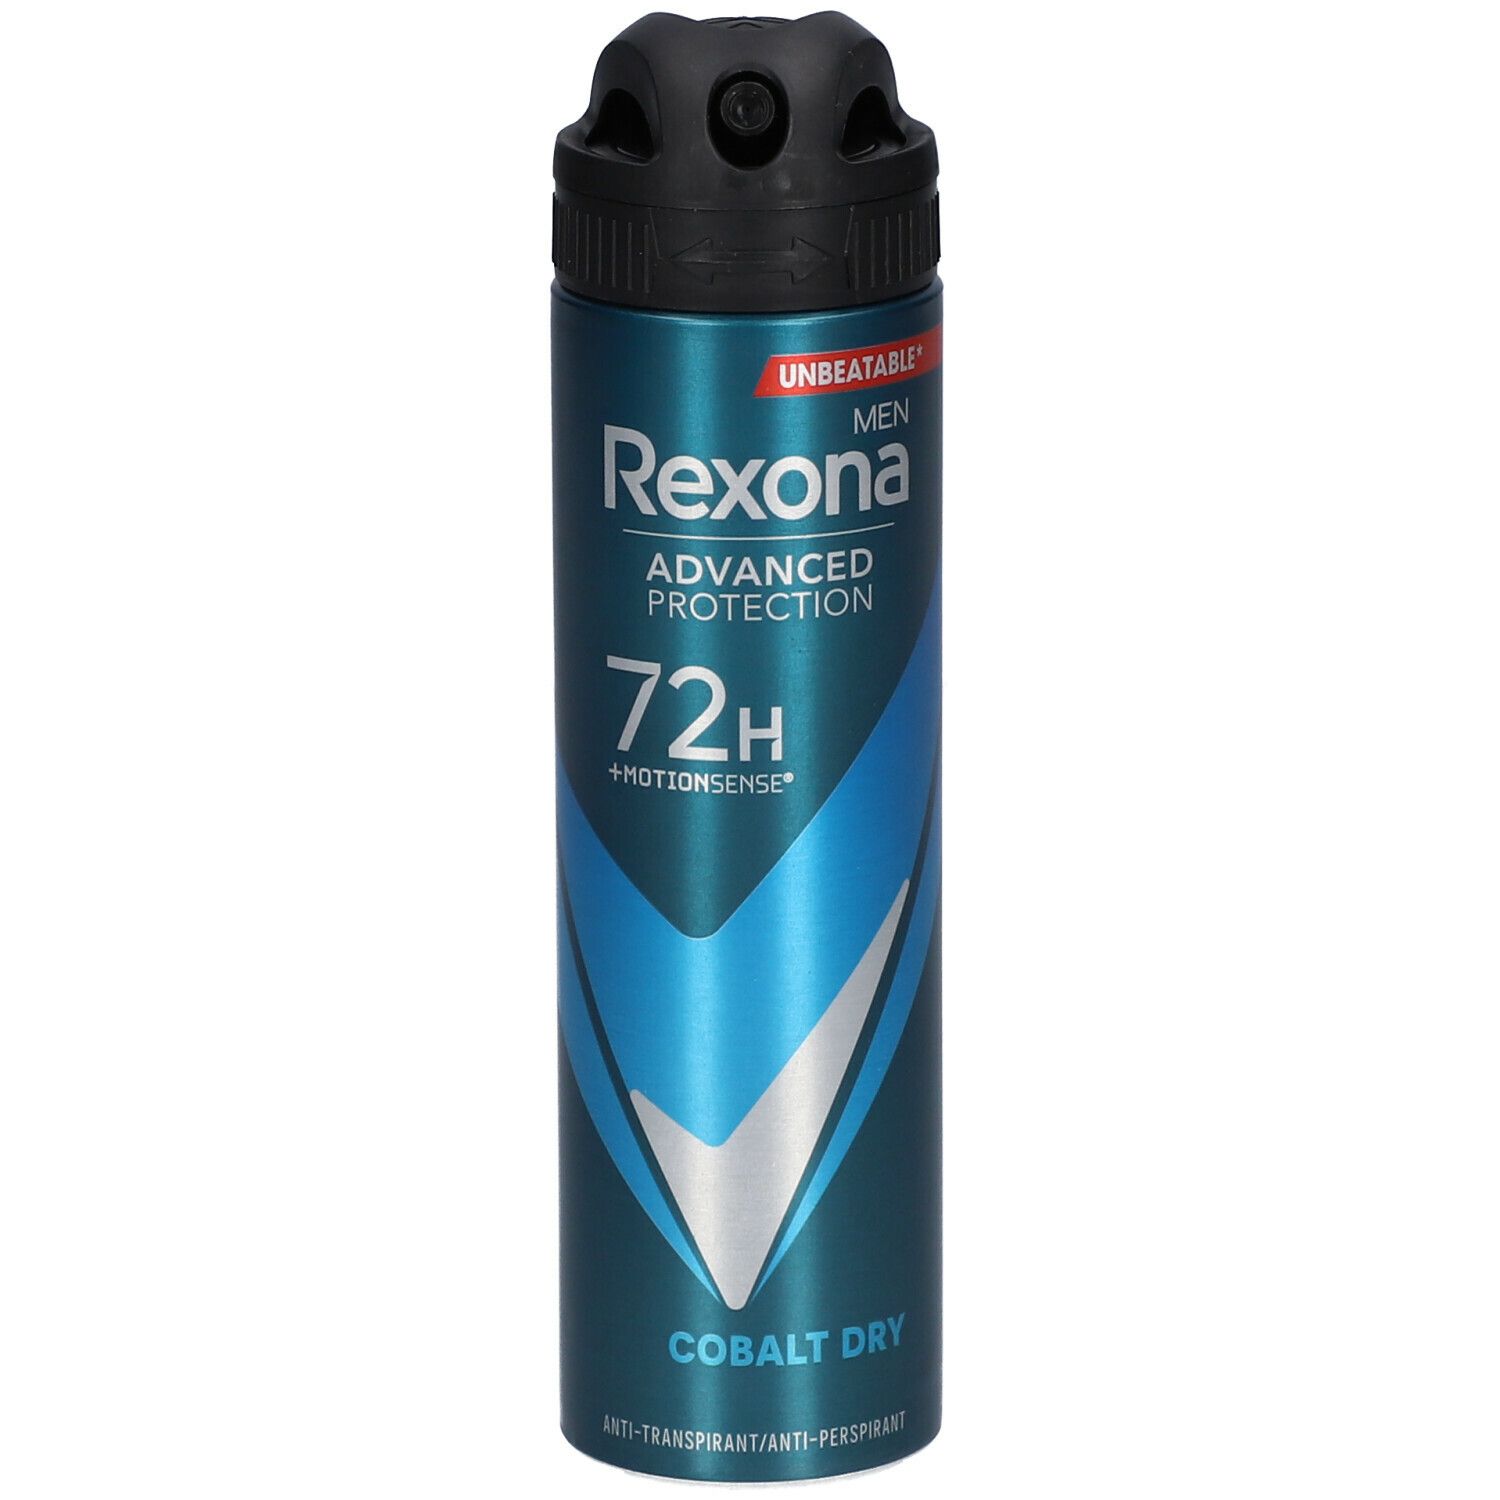 Rexona Men Advanced Protection Cobalt Dry Anti-Transpirant Déodorant Spray 72h